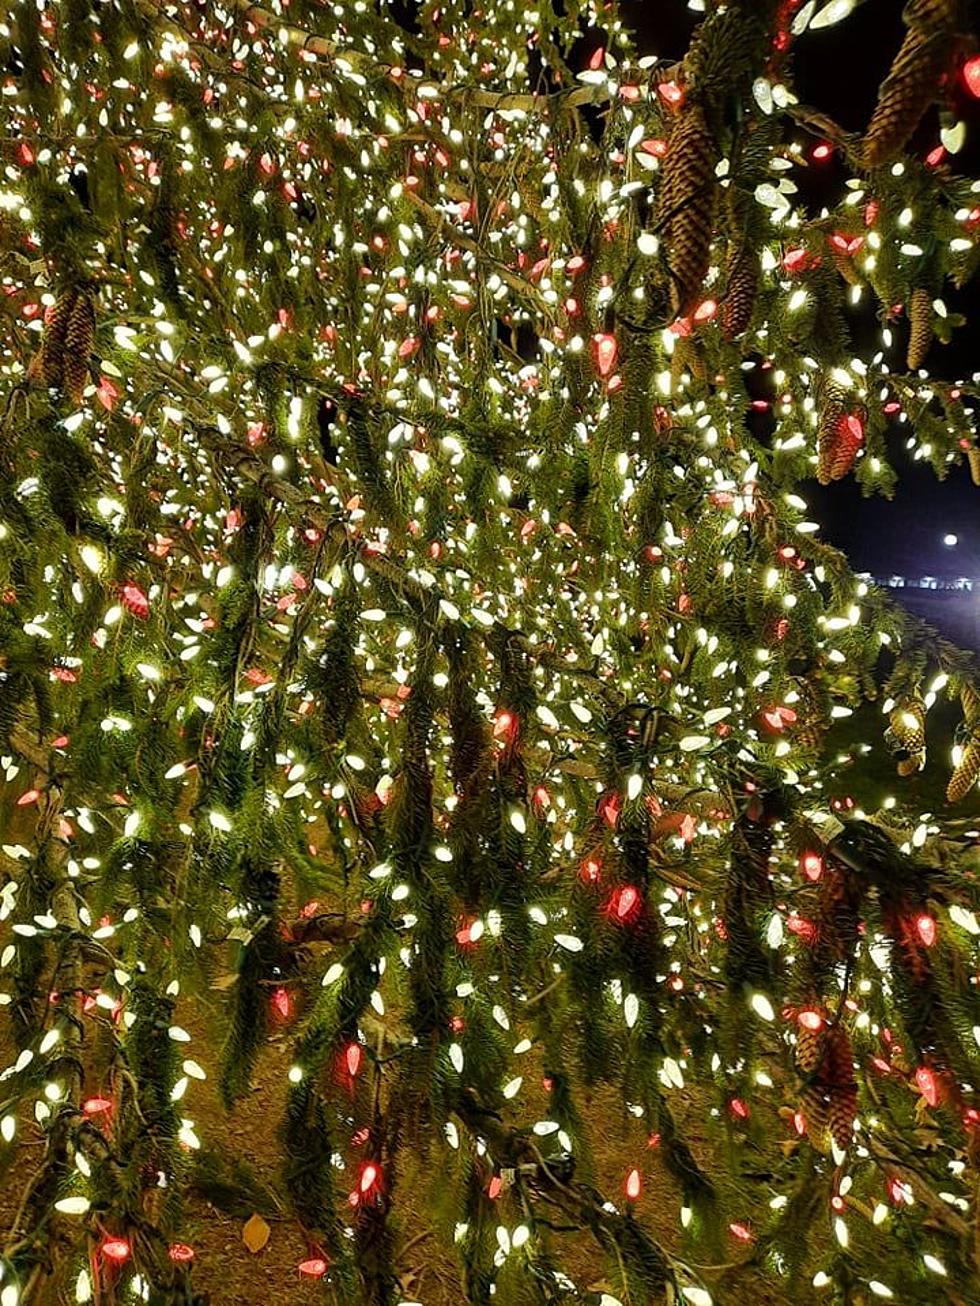 THIS Poughkeepsie Christmas Tree Has 55% More Lights Than Rockefeller